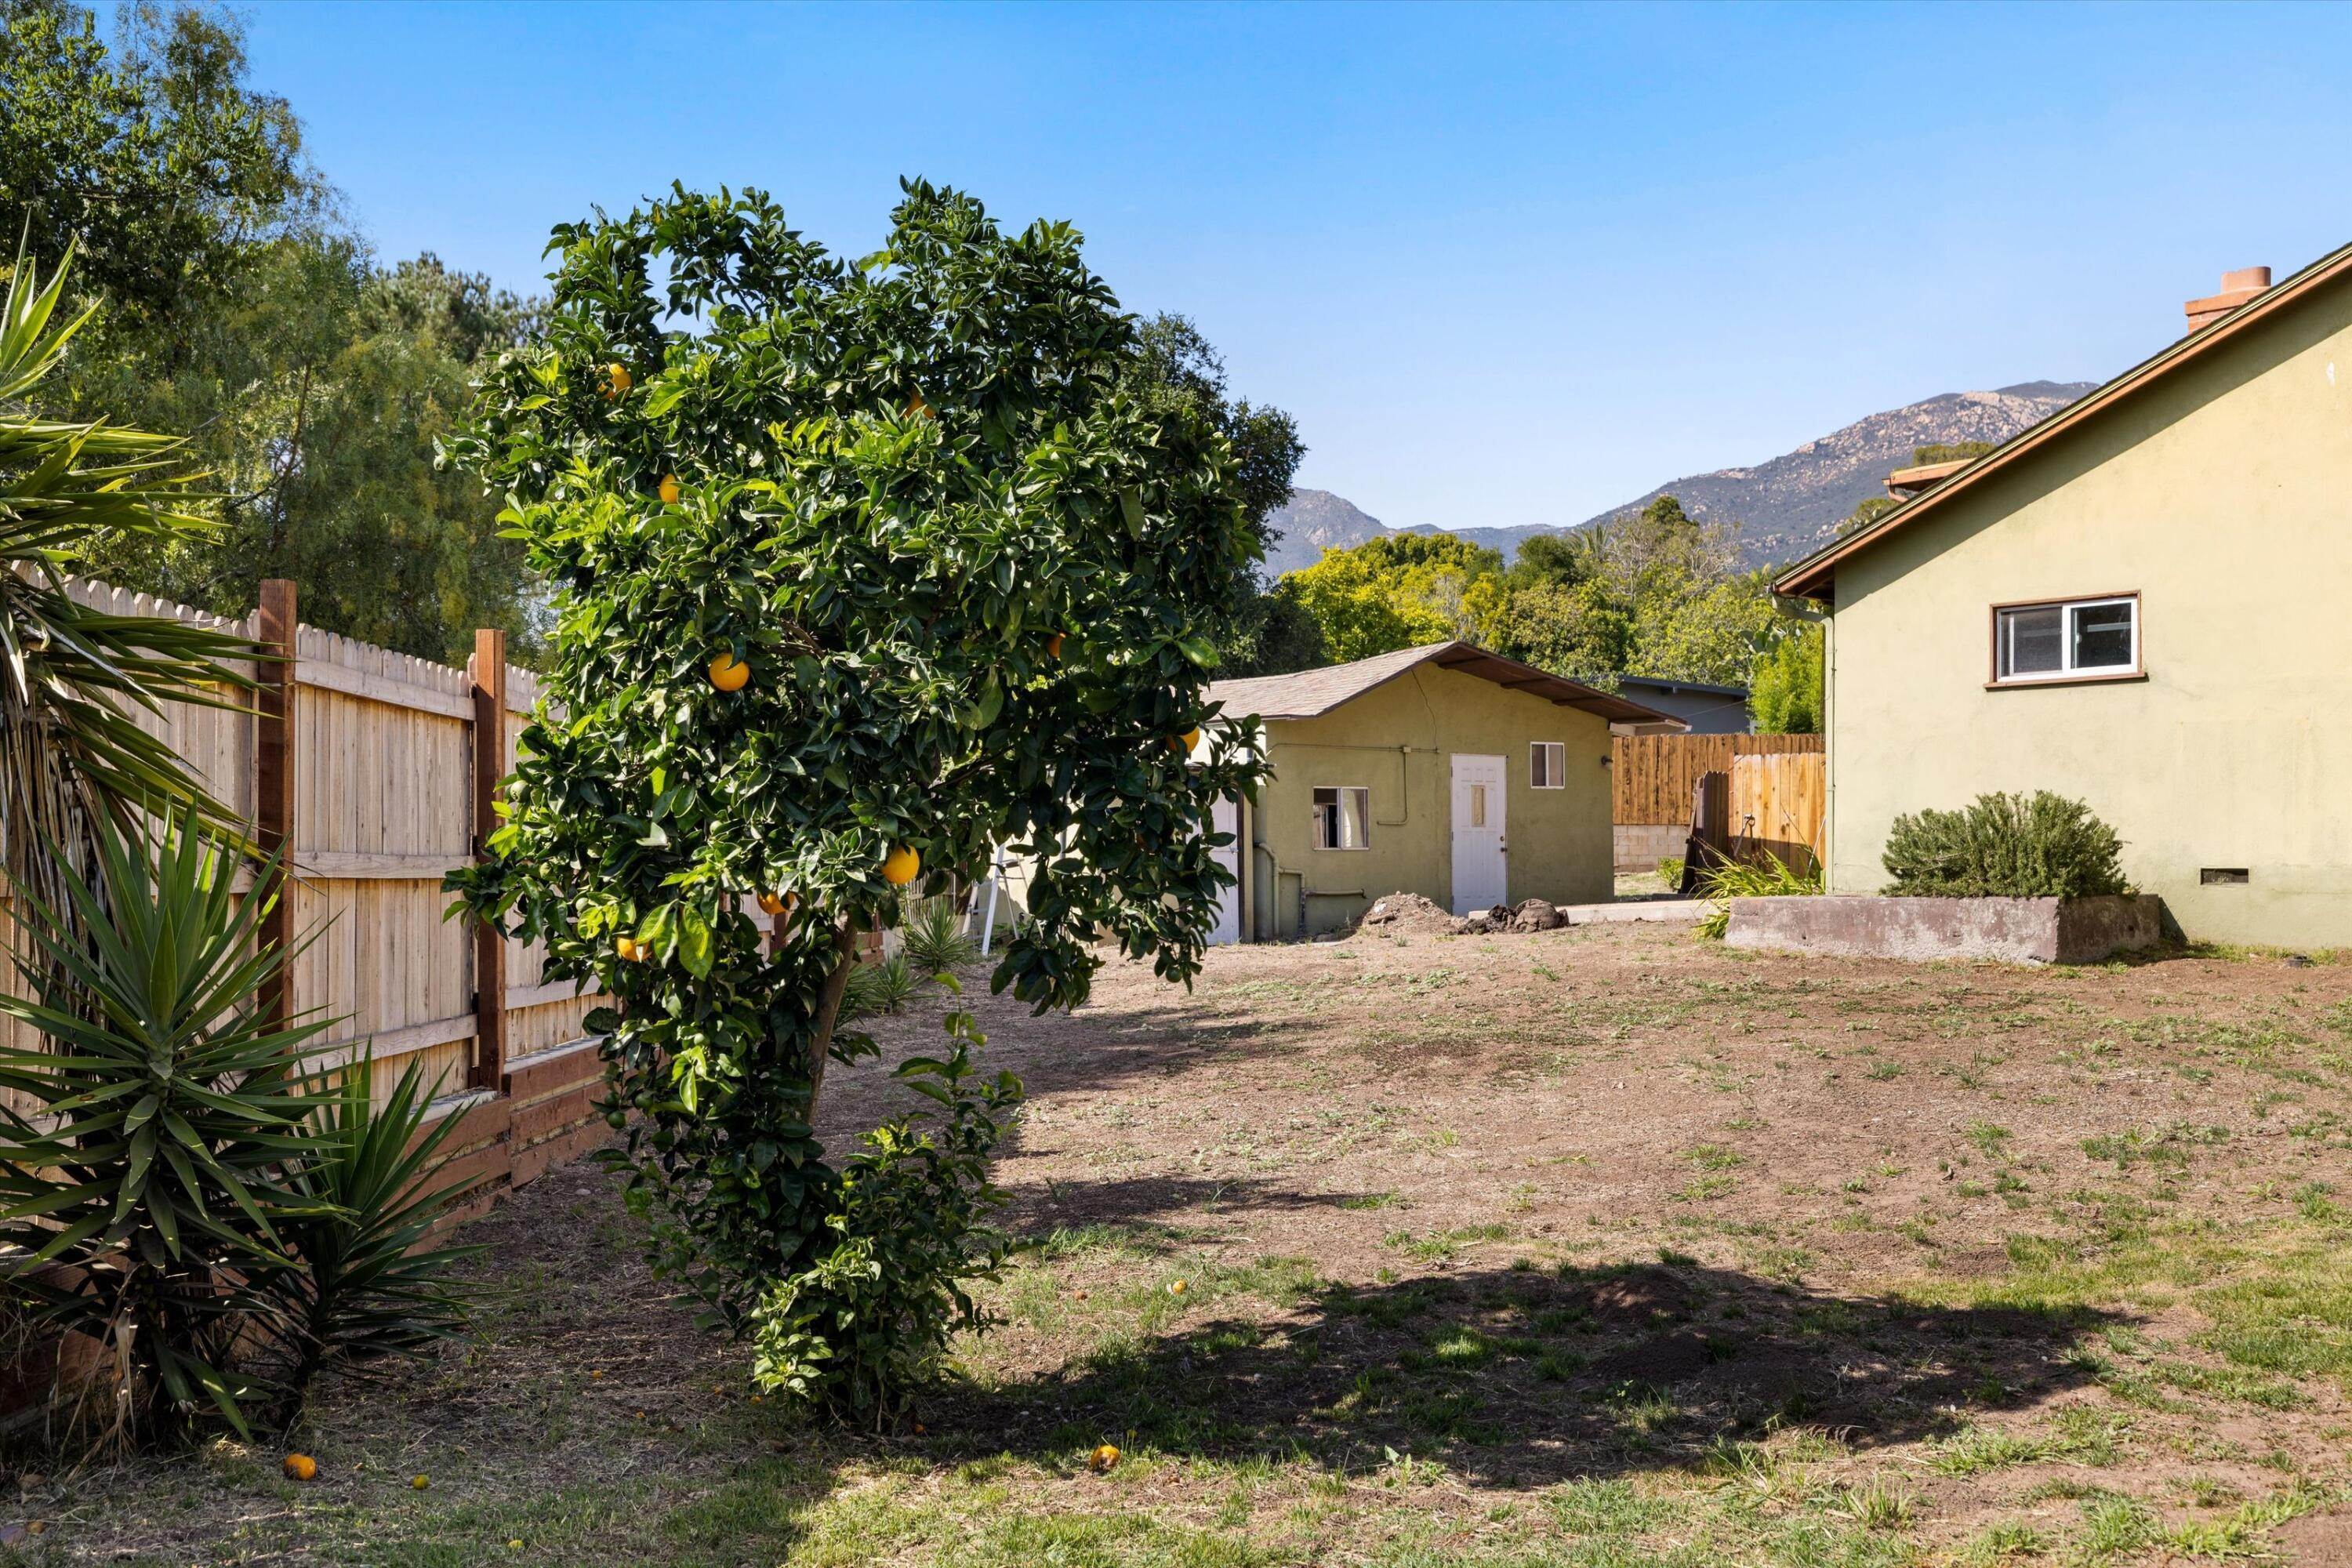 20. Estate for Sale at 3950 Foothill Road Santa Barbara, California 93110 United States